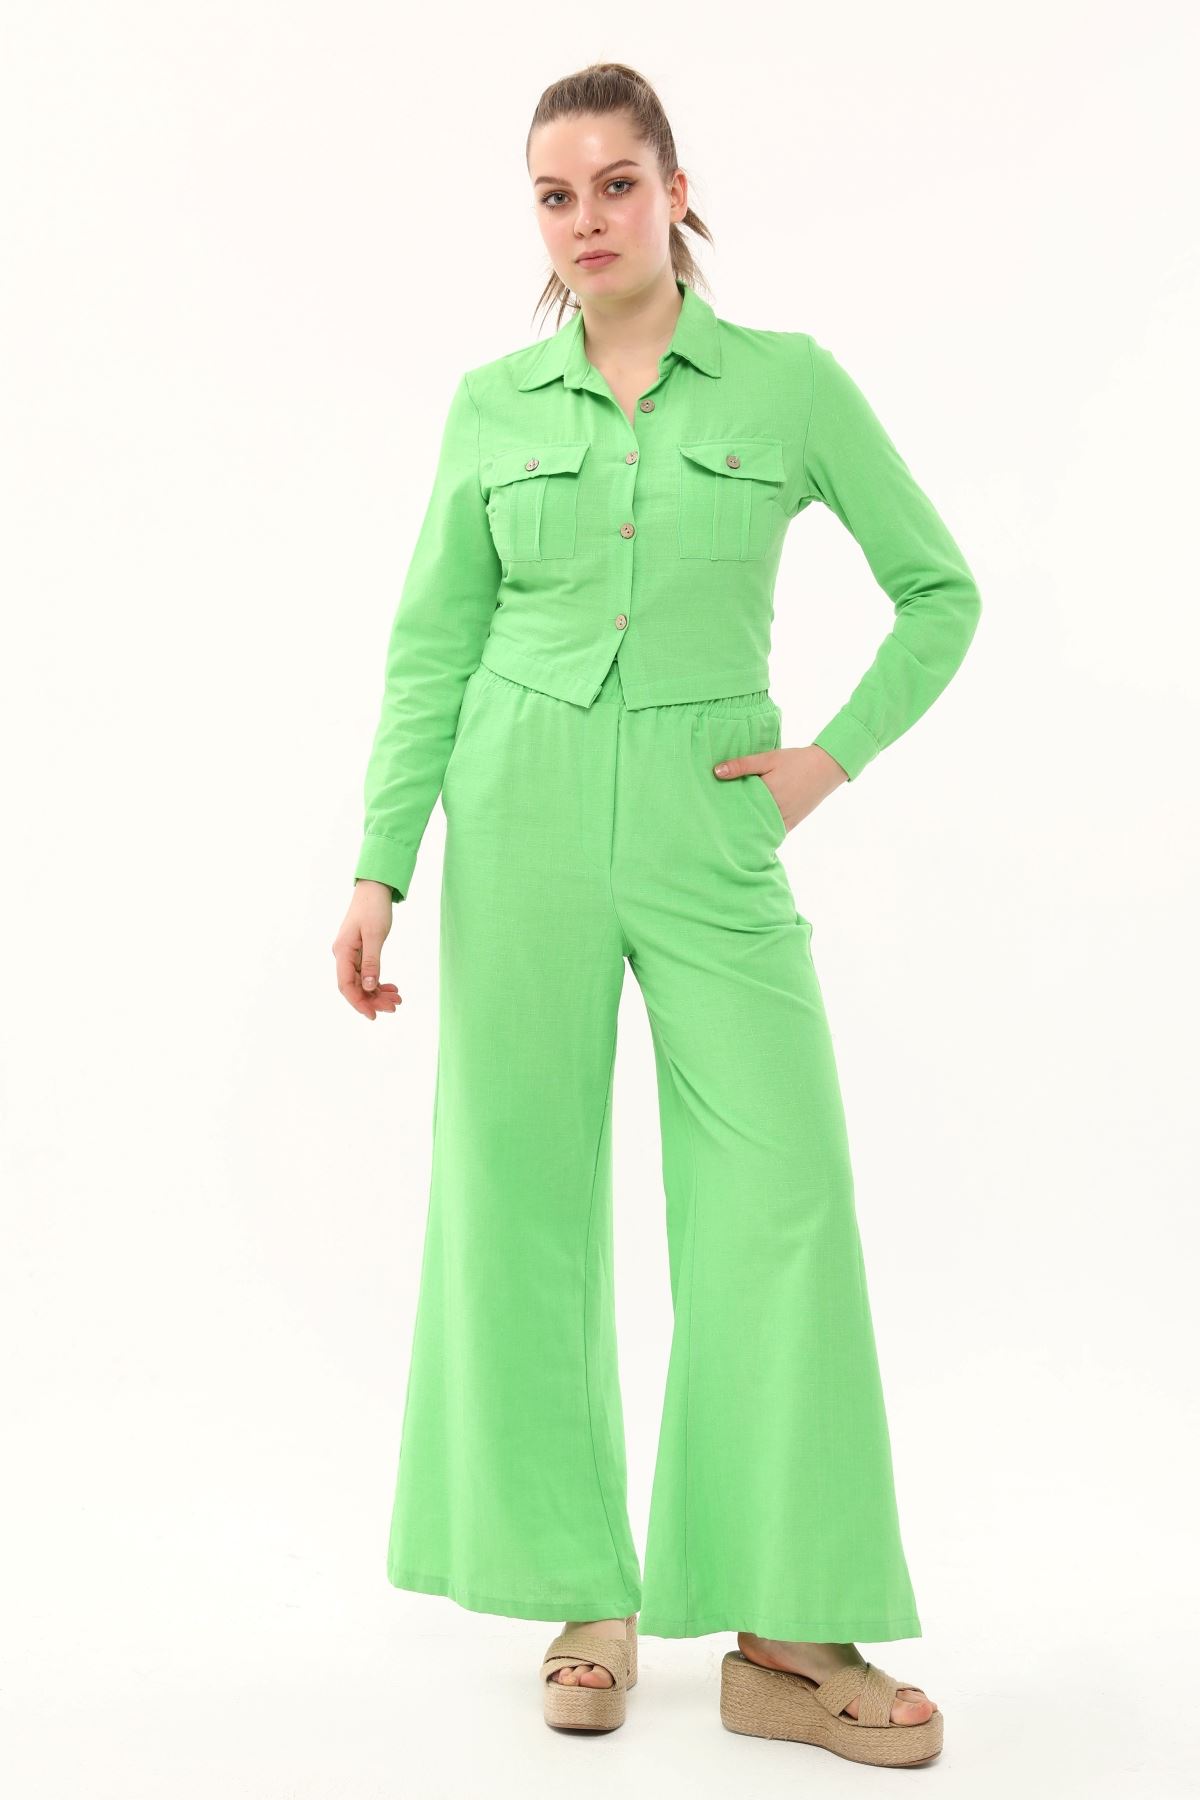 Women's 2 Piece Suit with Pocket Details